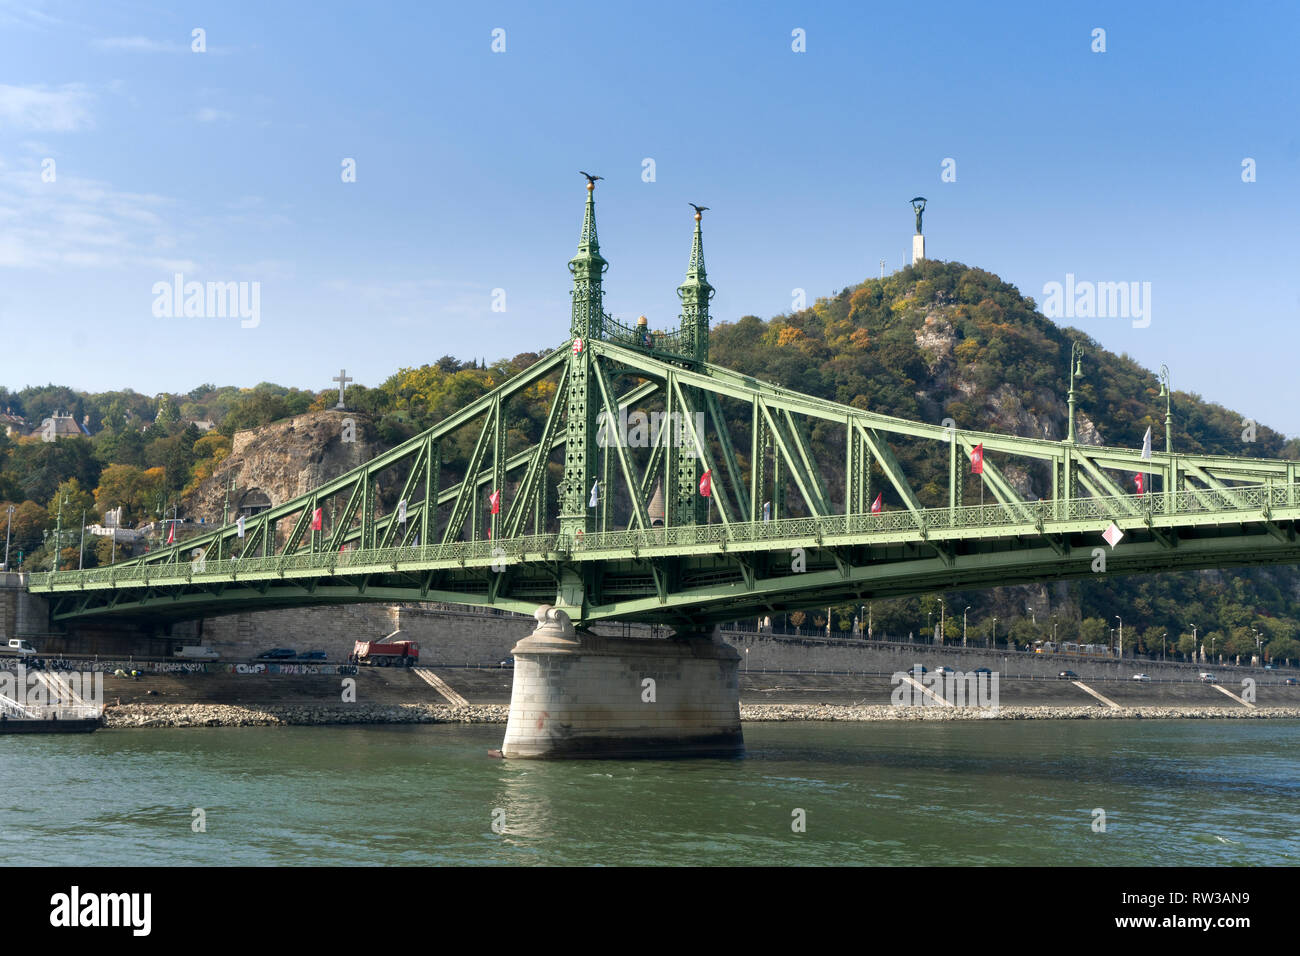 Budapest, capital city of Hungary. Liberty statue and chain bridge. Stock Photo